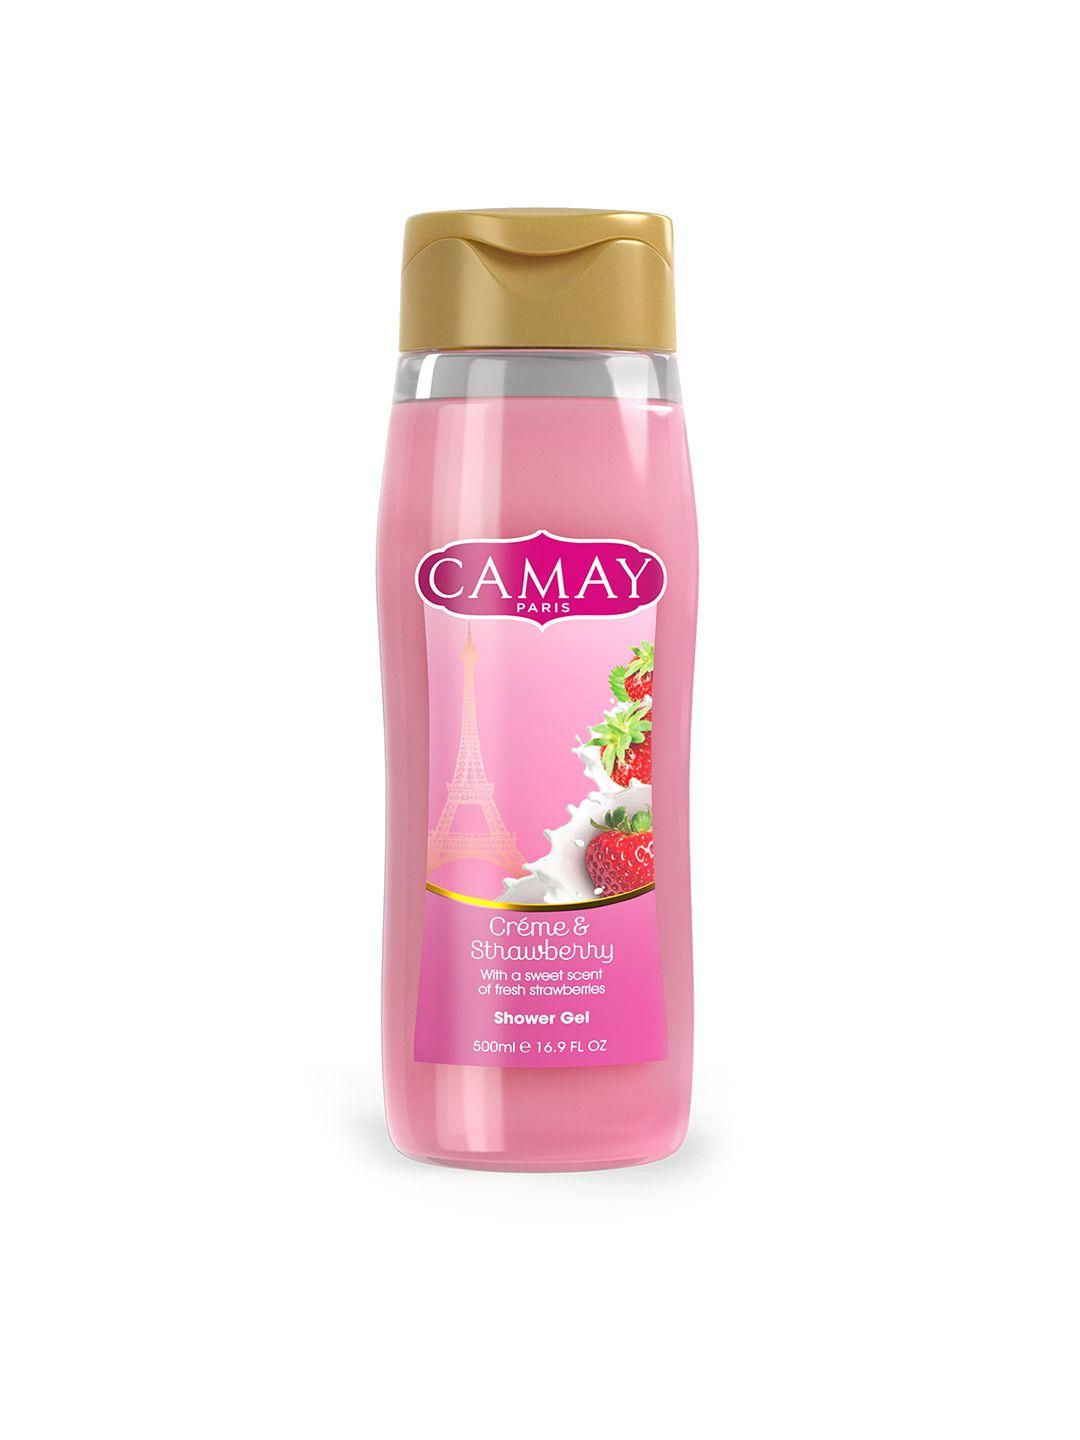 camay paris creme & strawberry shower gel for soft fragrant skin - 500ml